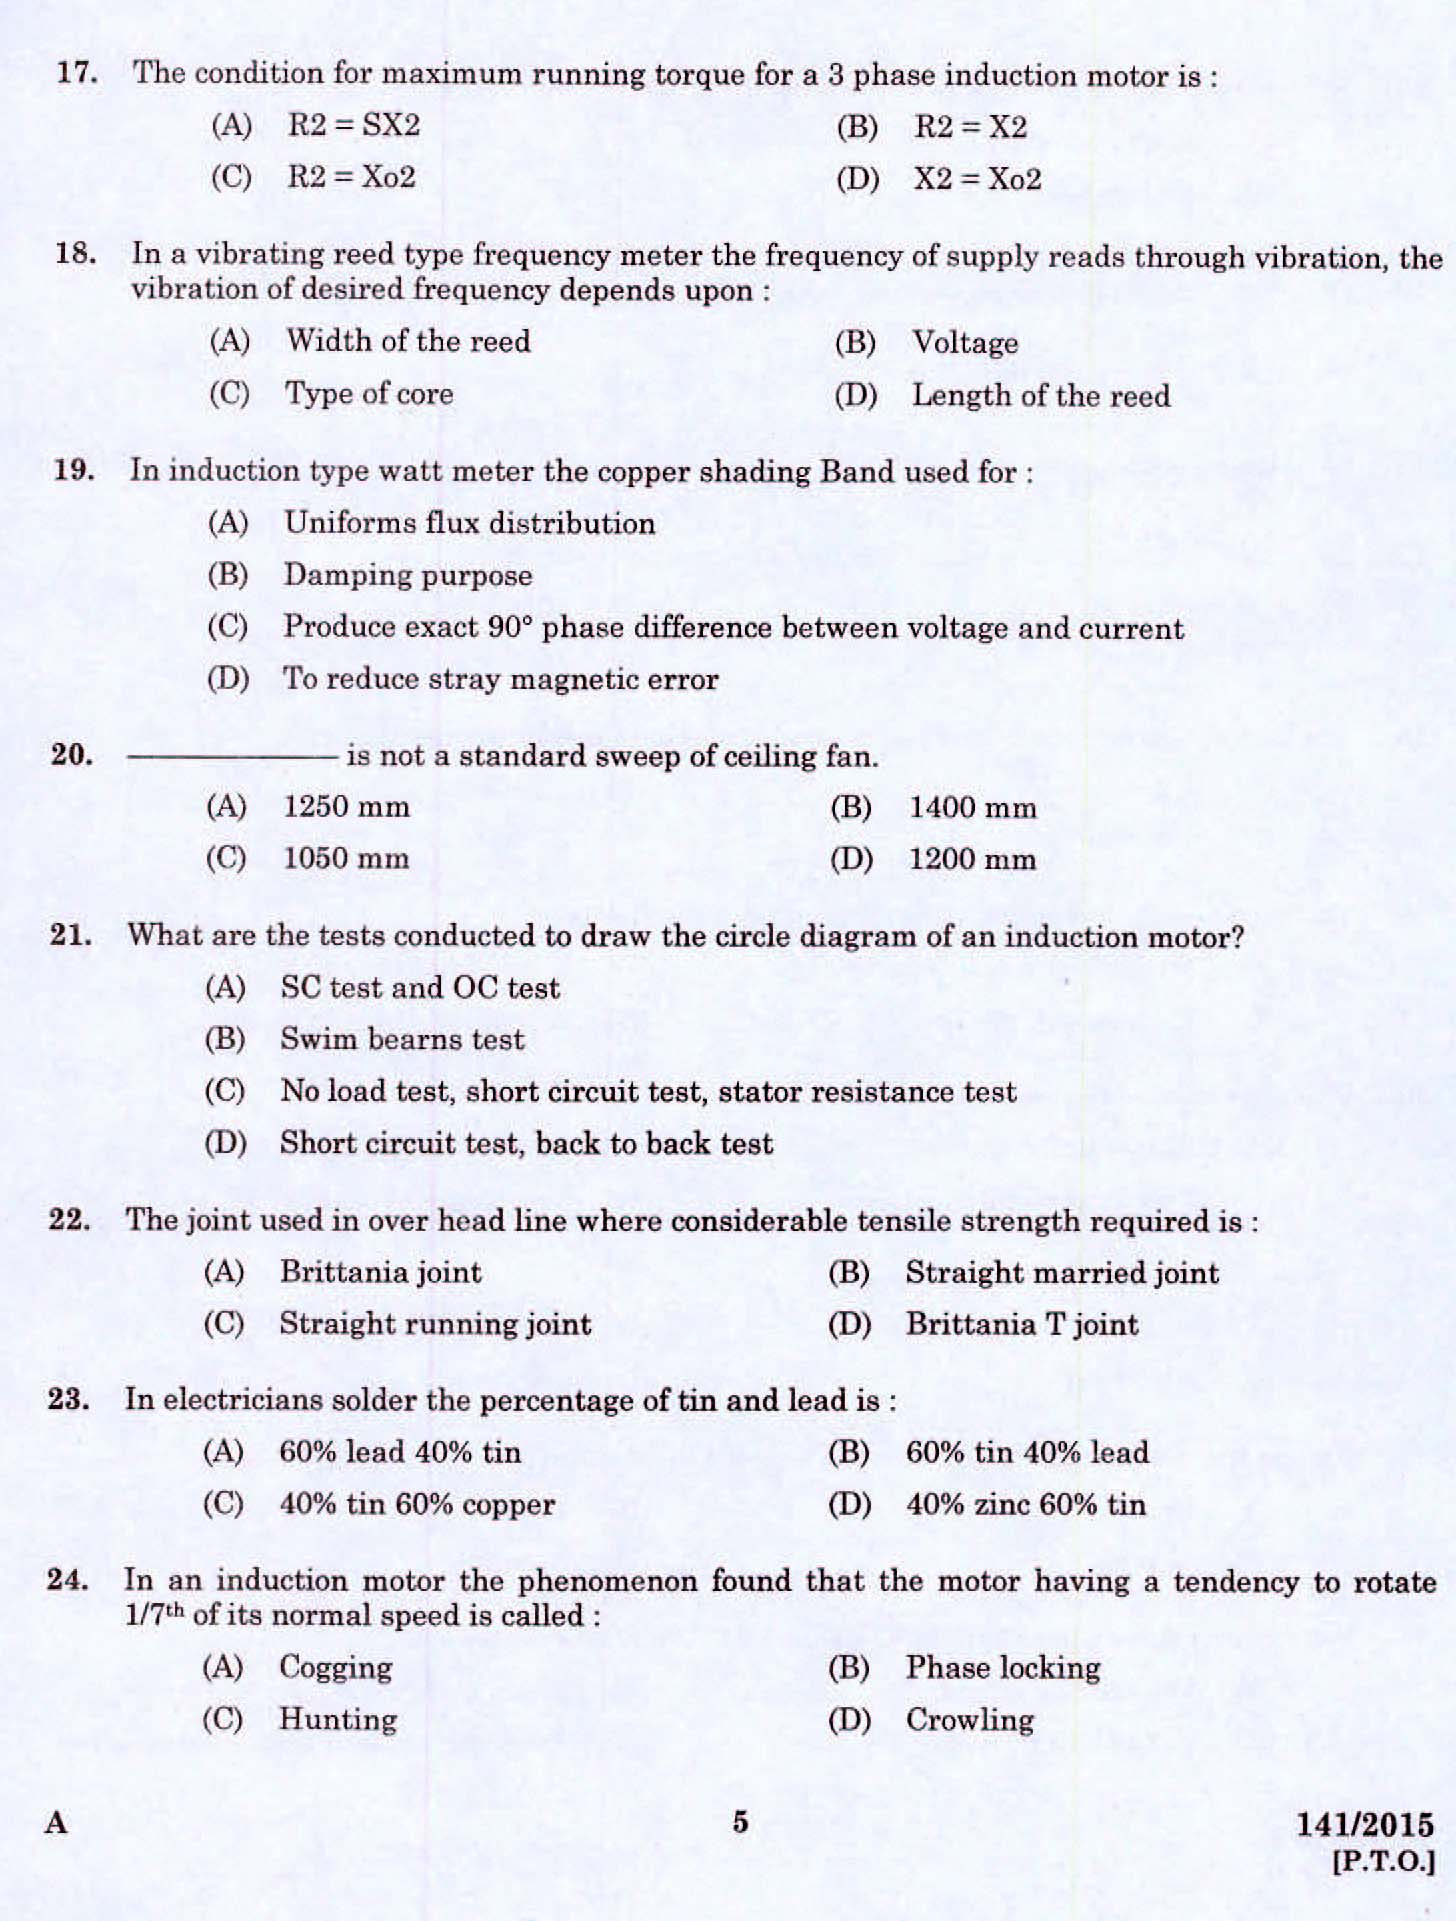 Kerala PSC Electrician Exam 2015 Question Paper Code 1412015 3